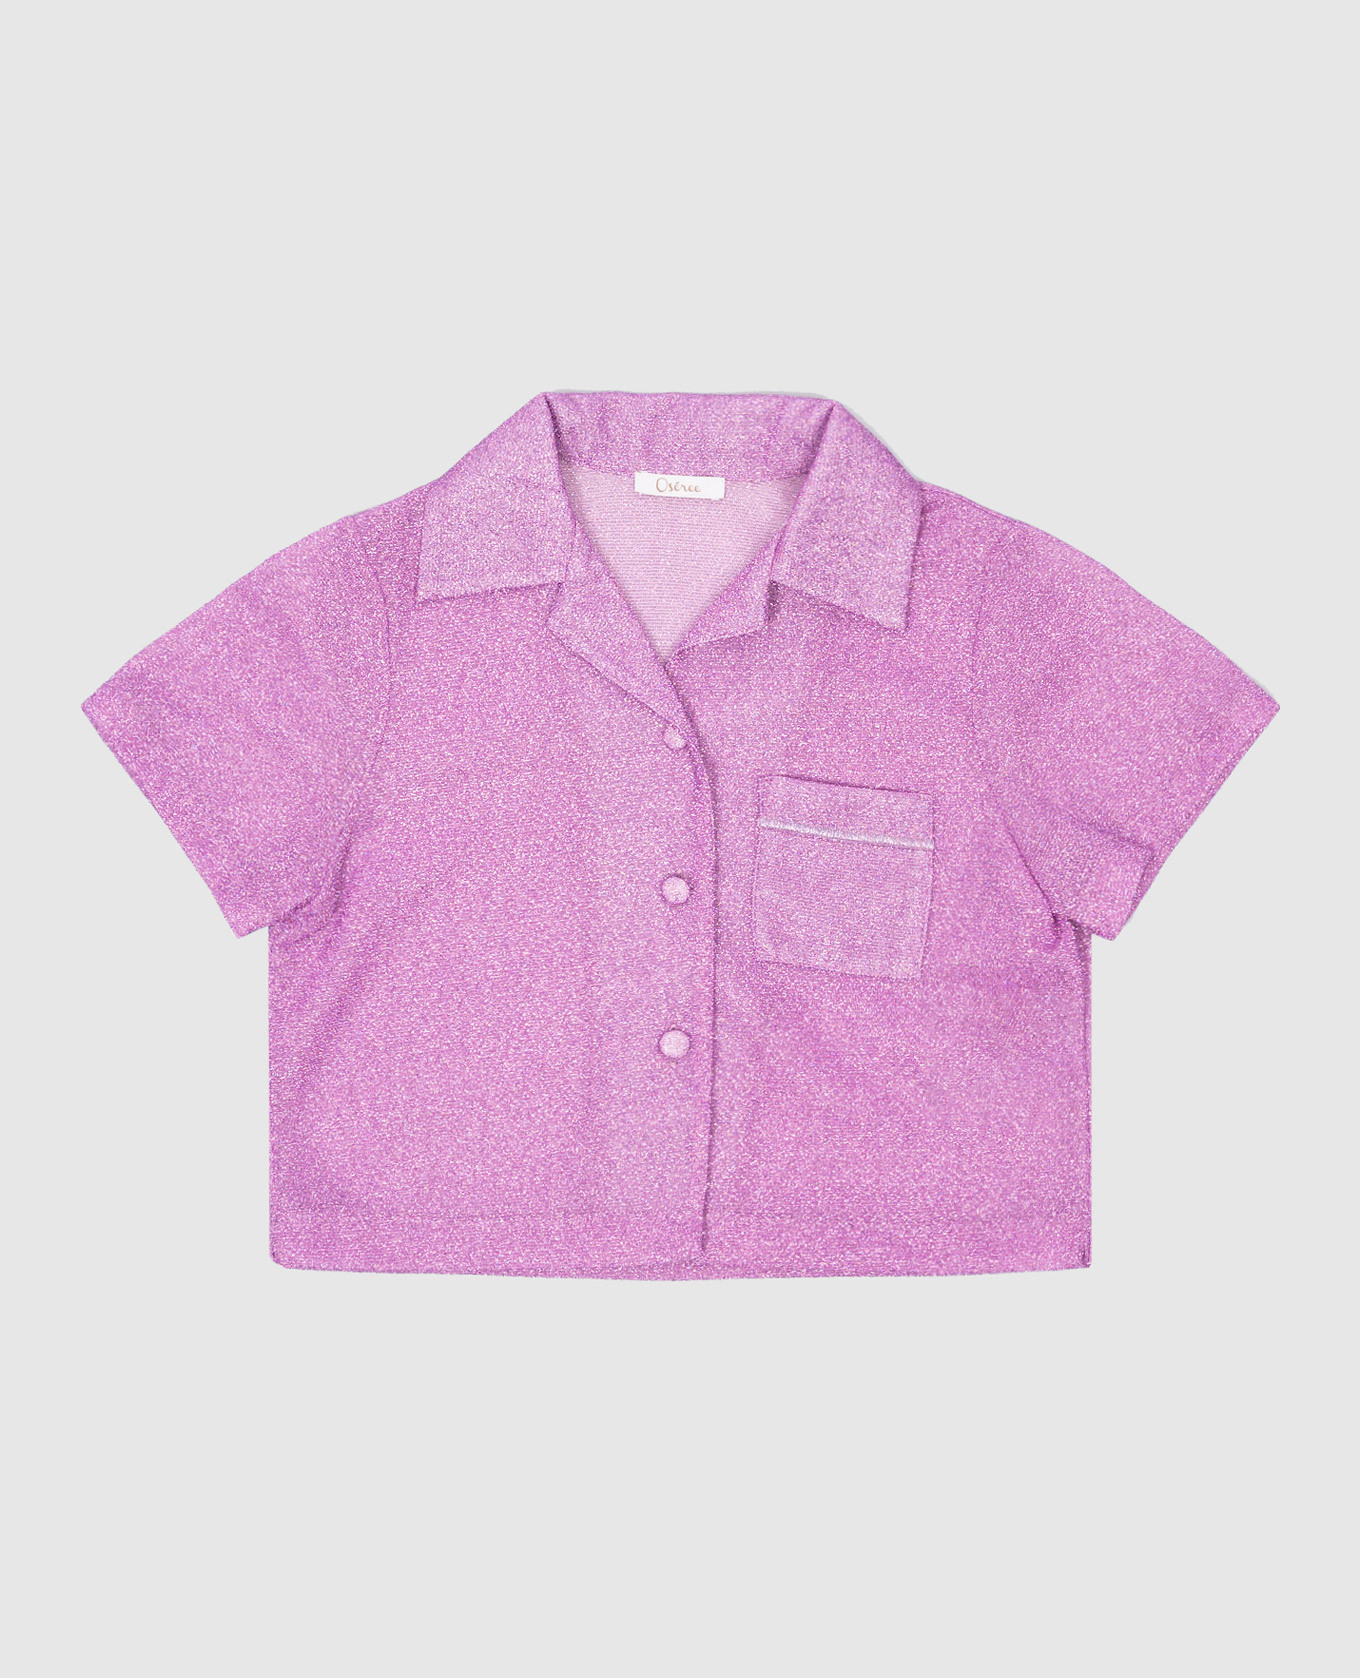 Children's purple shirt OSEMINI LUMIERE BOWLING with lurex